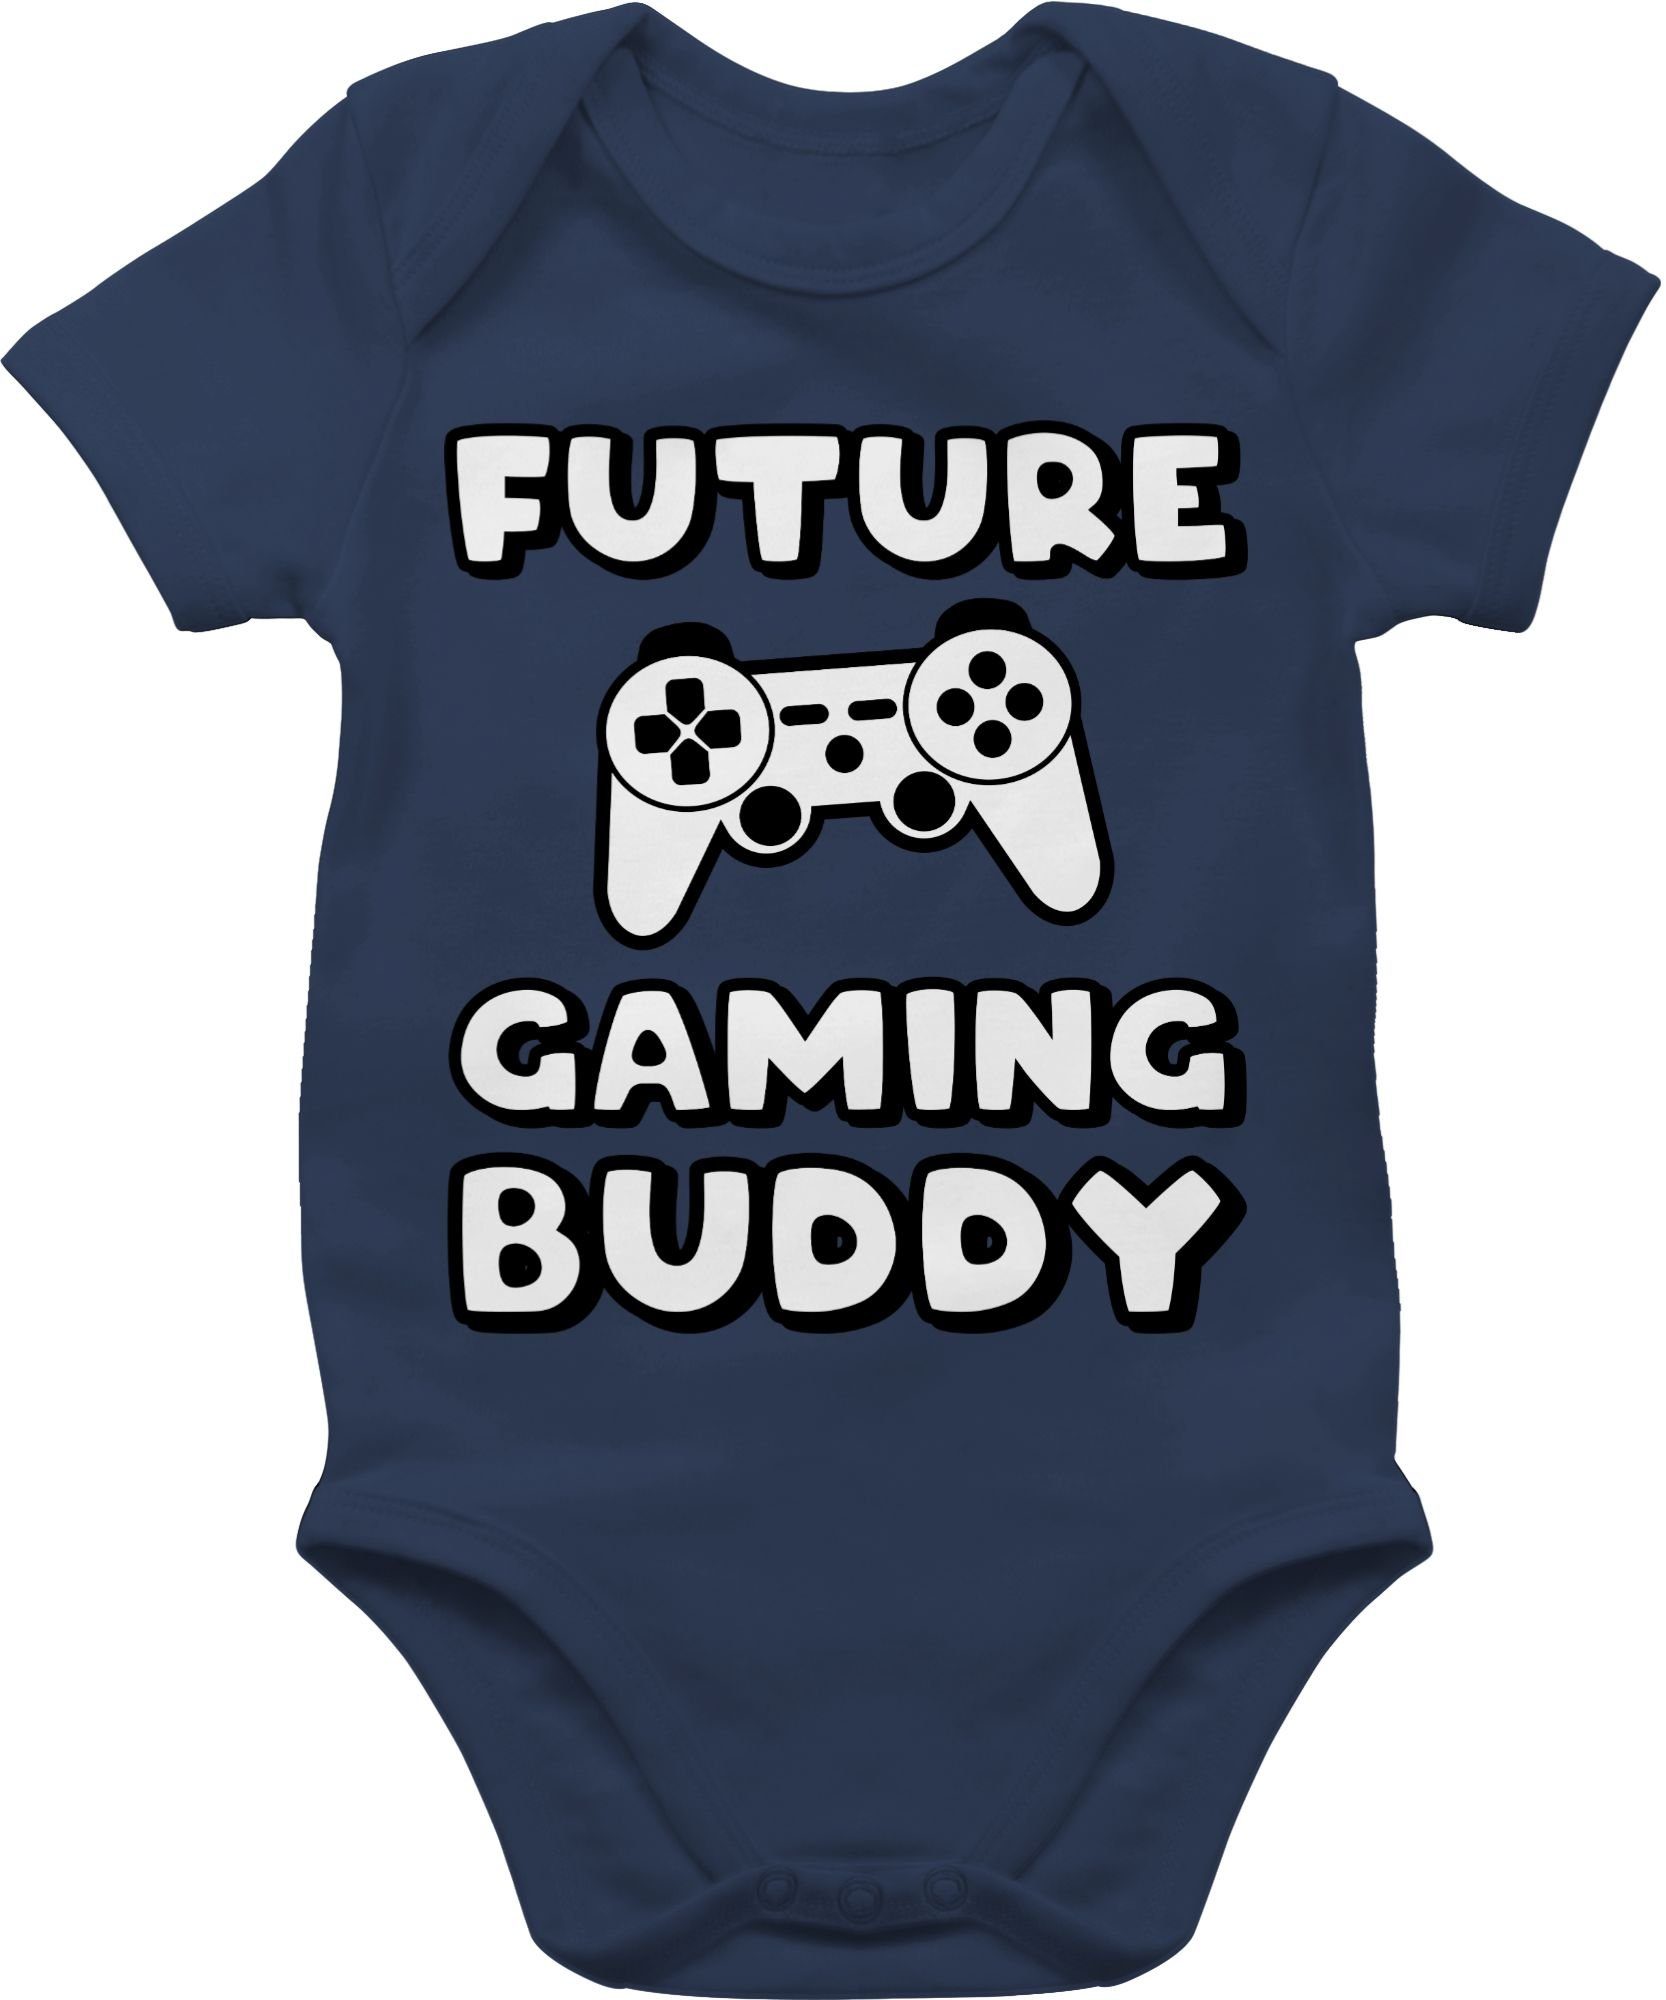 Shirtracer Shirtbody Future Gaming Navy 2 Blau Baby Sprüche Buddy